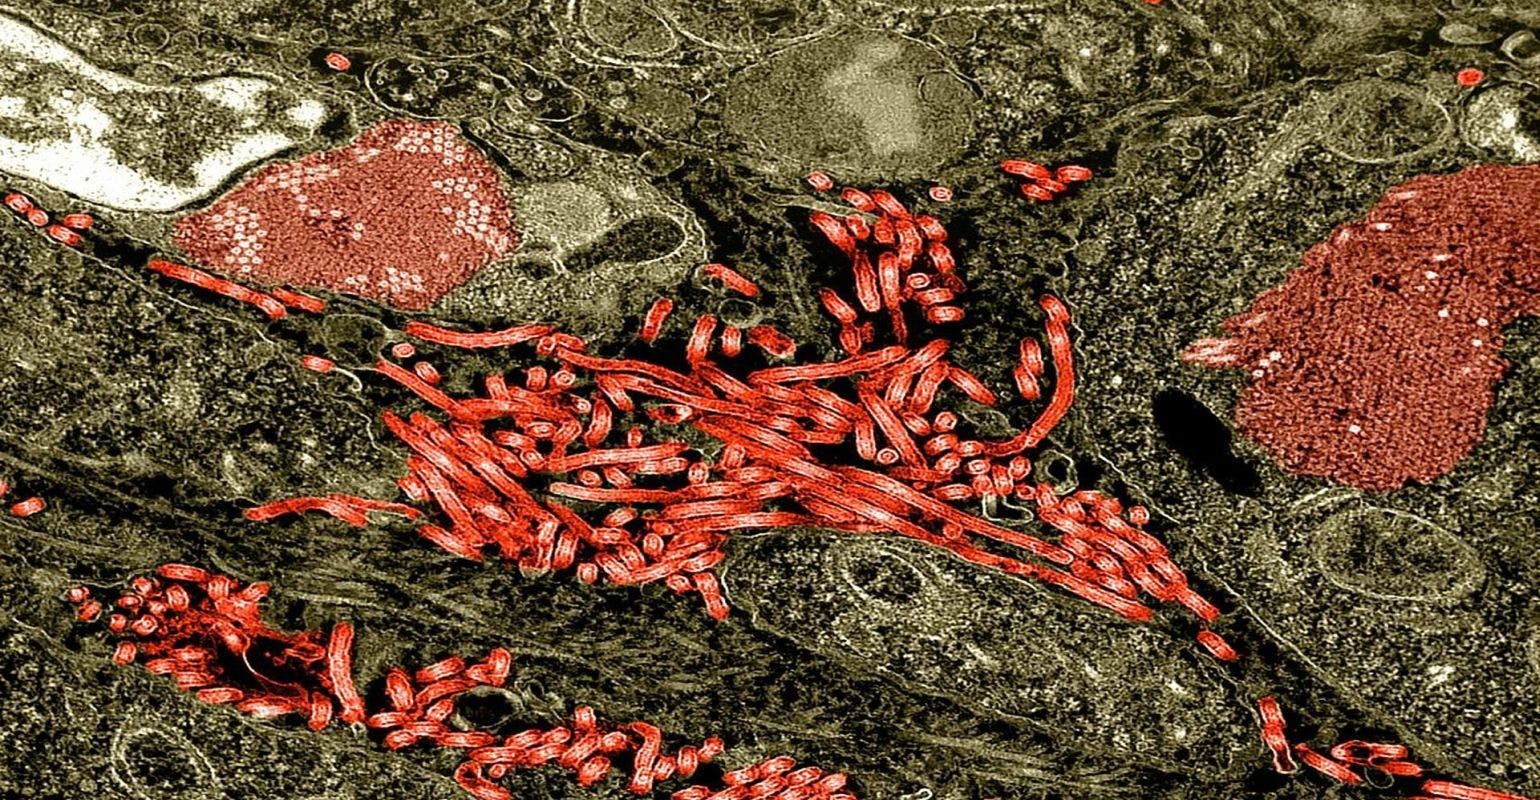 Ebola Virus Infects Reproductive Organs